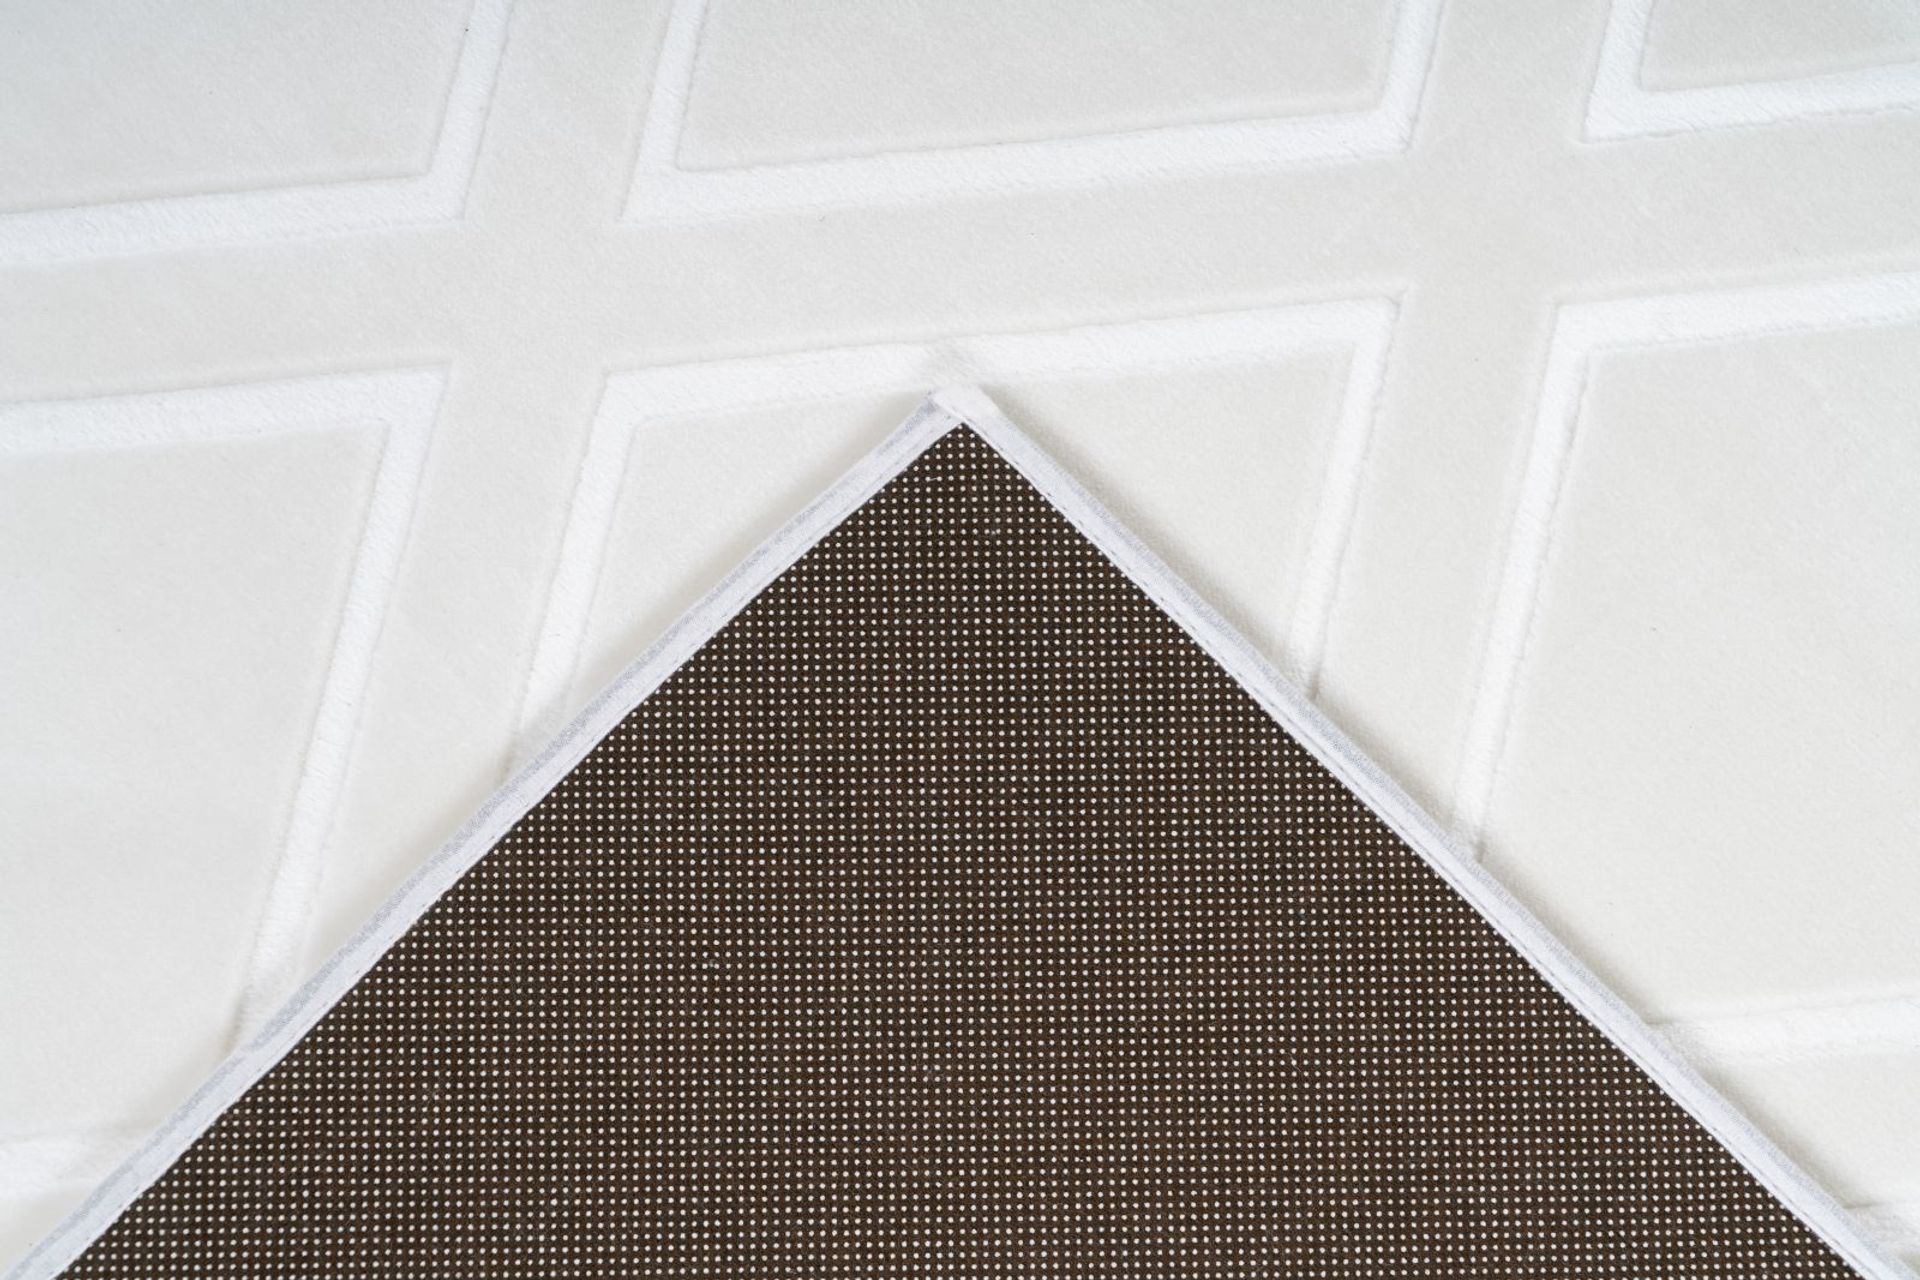 Teppich Monroe 300 Weiß 80 cm x 300 cm